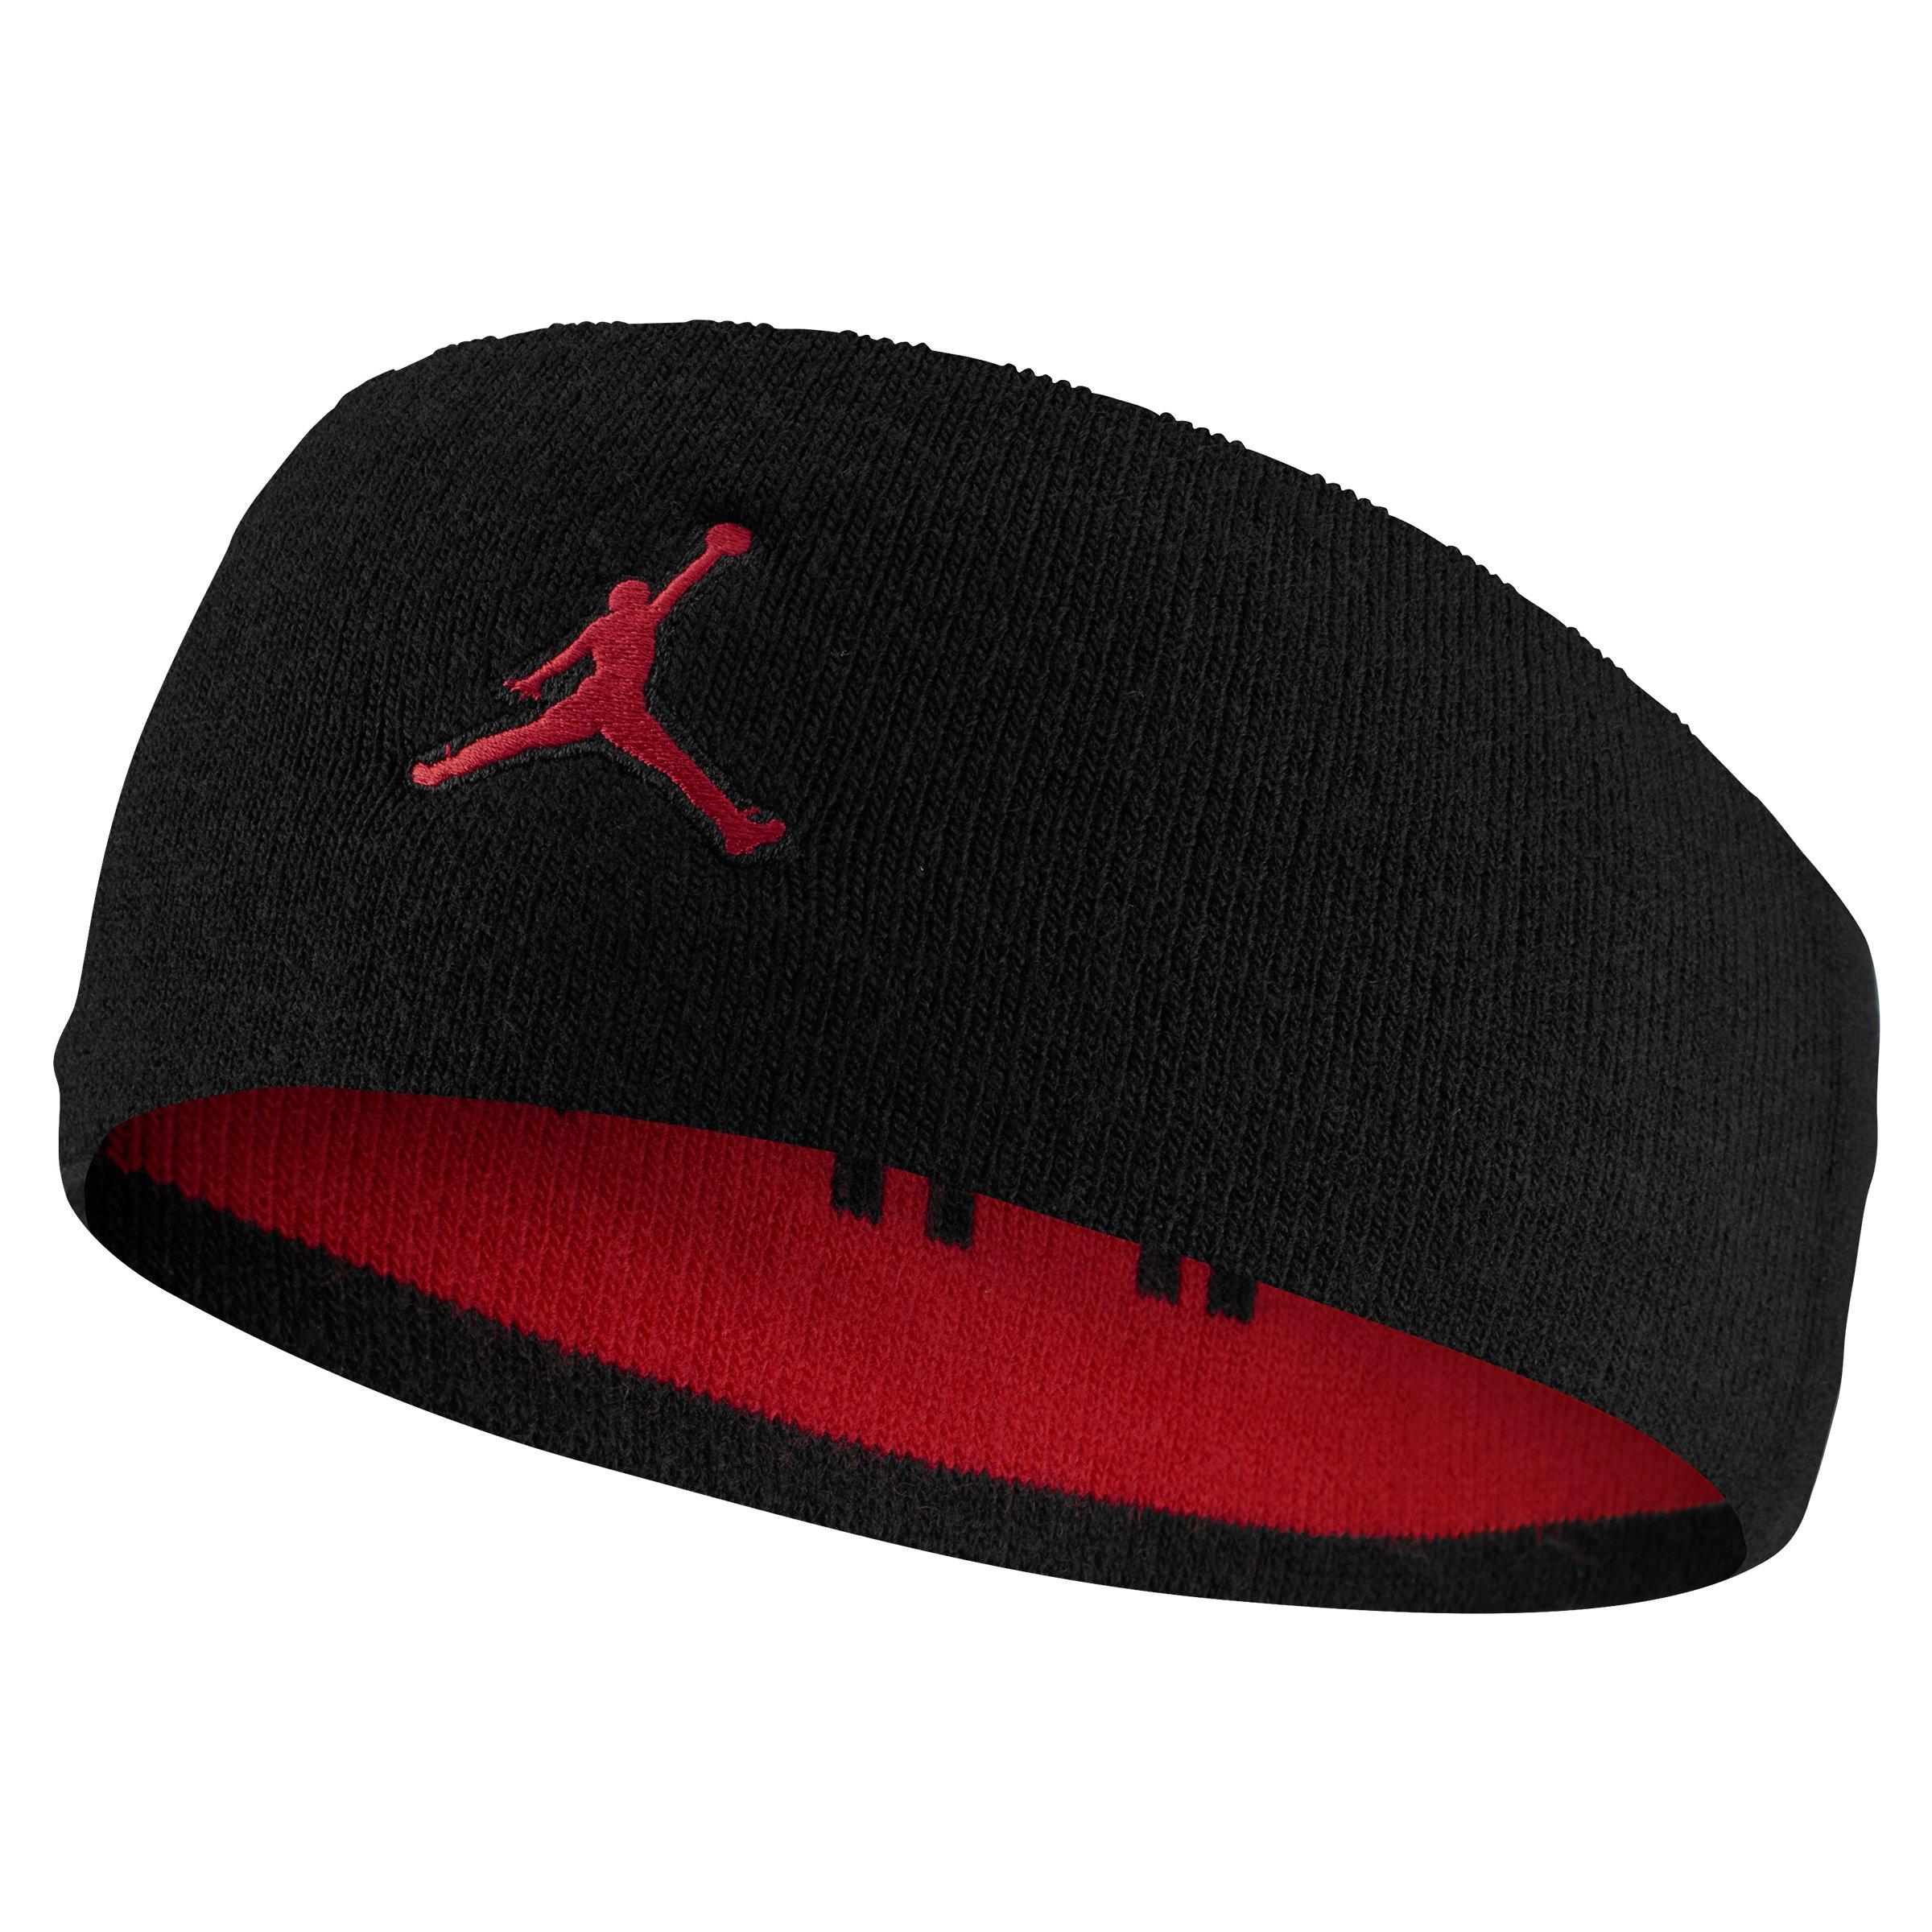 black and red jordan headband